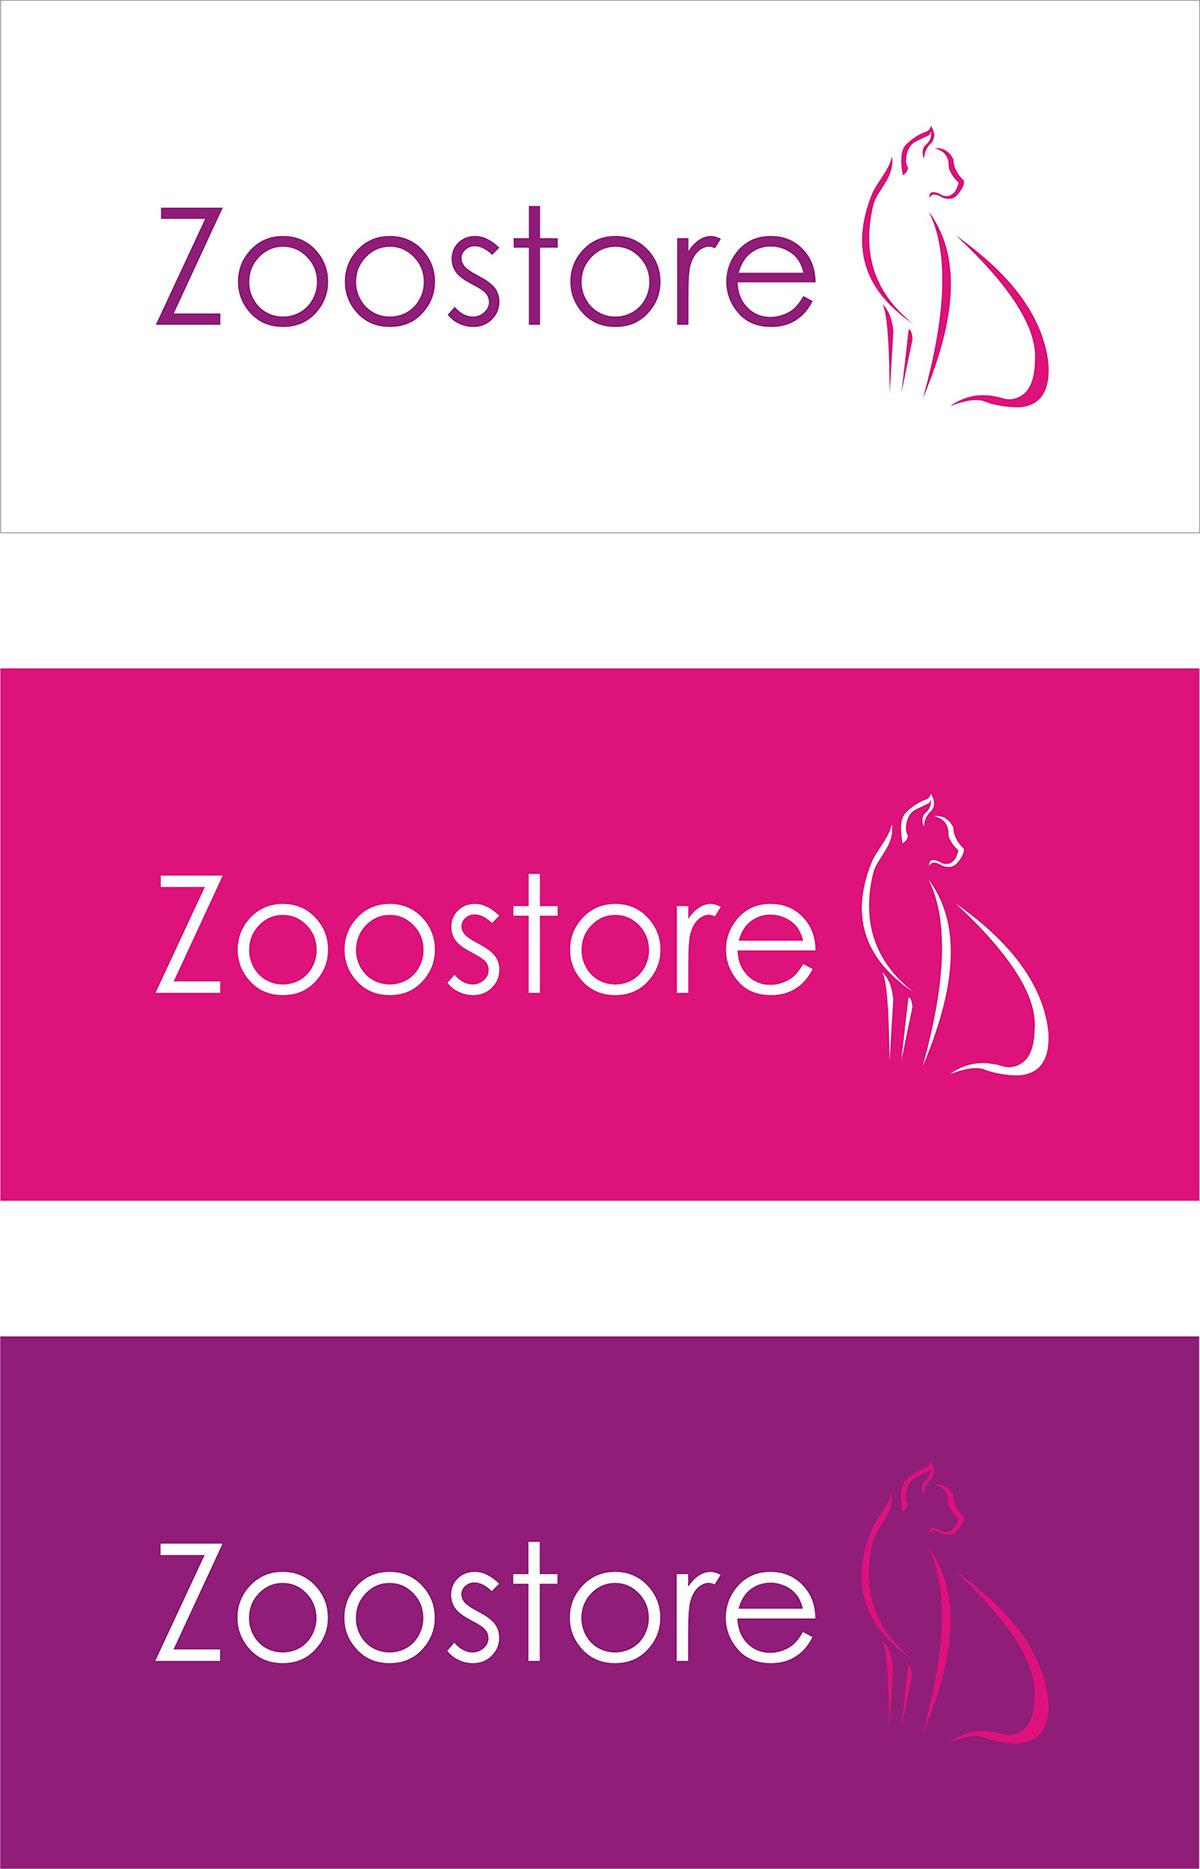 zoostore logo